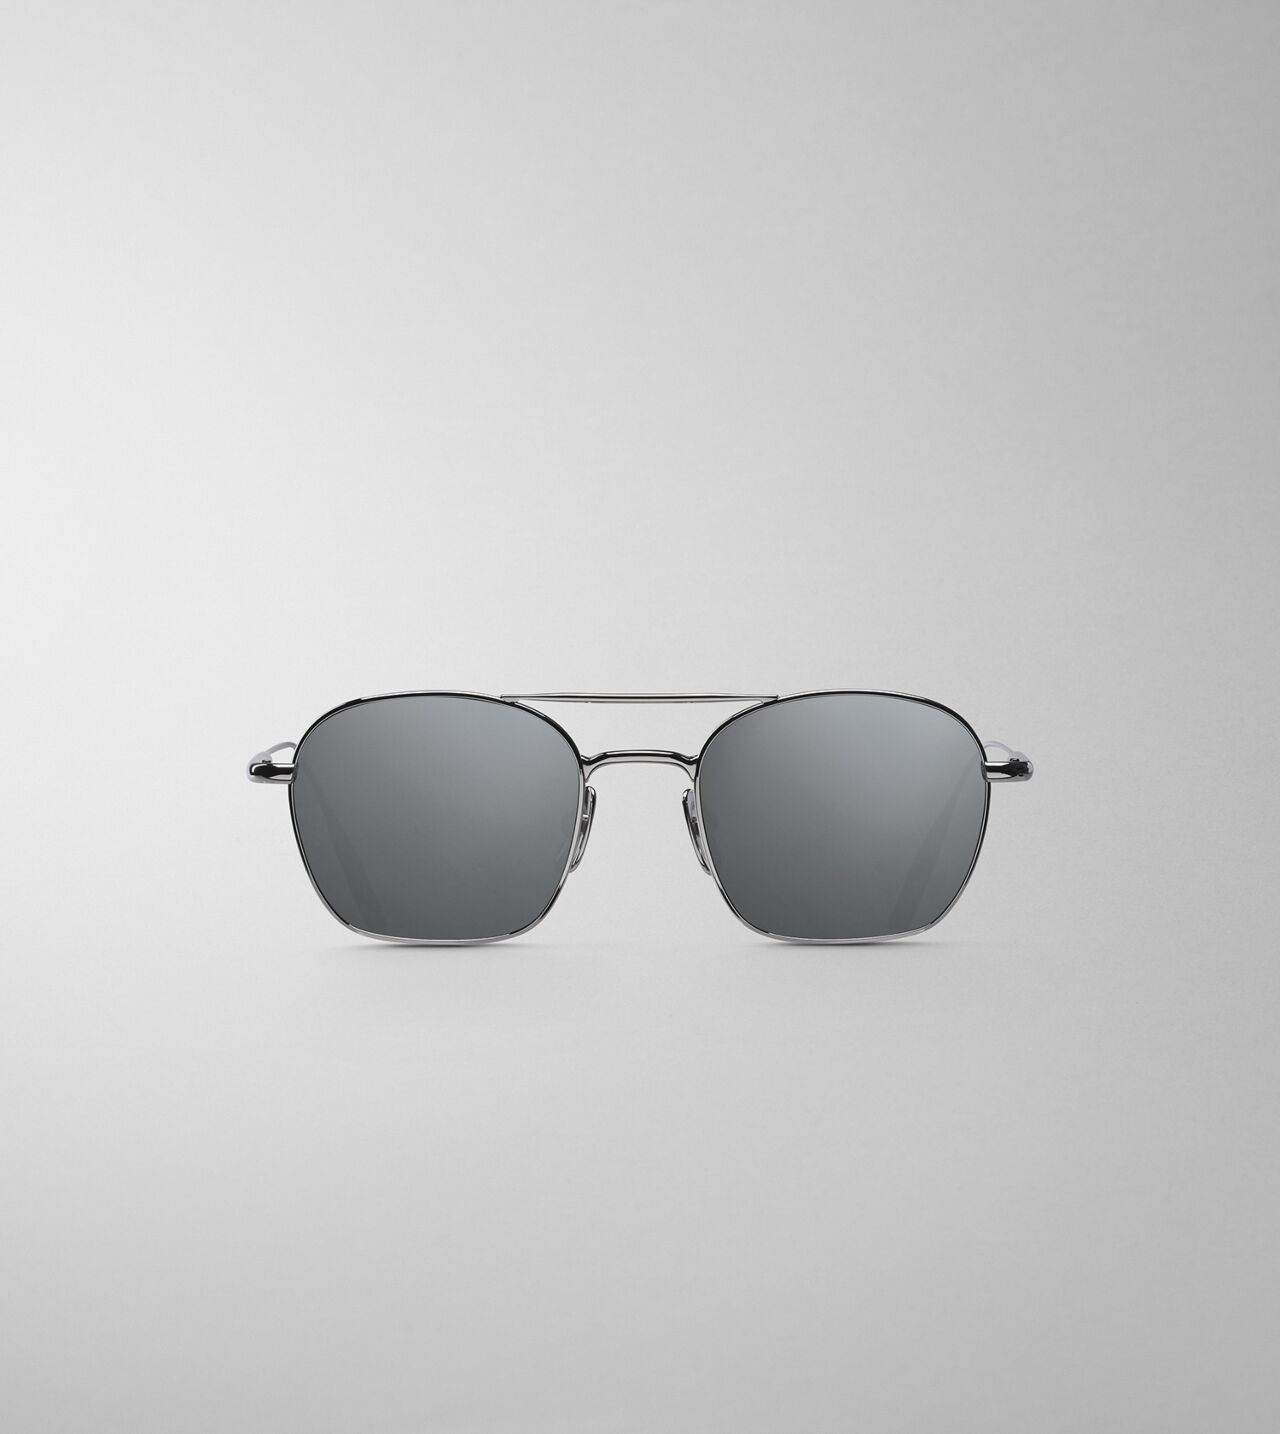 Maeda Sunglasses in Palladium grey mirror